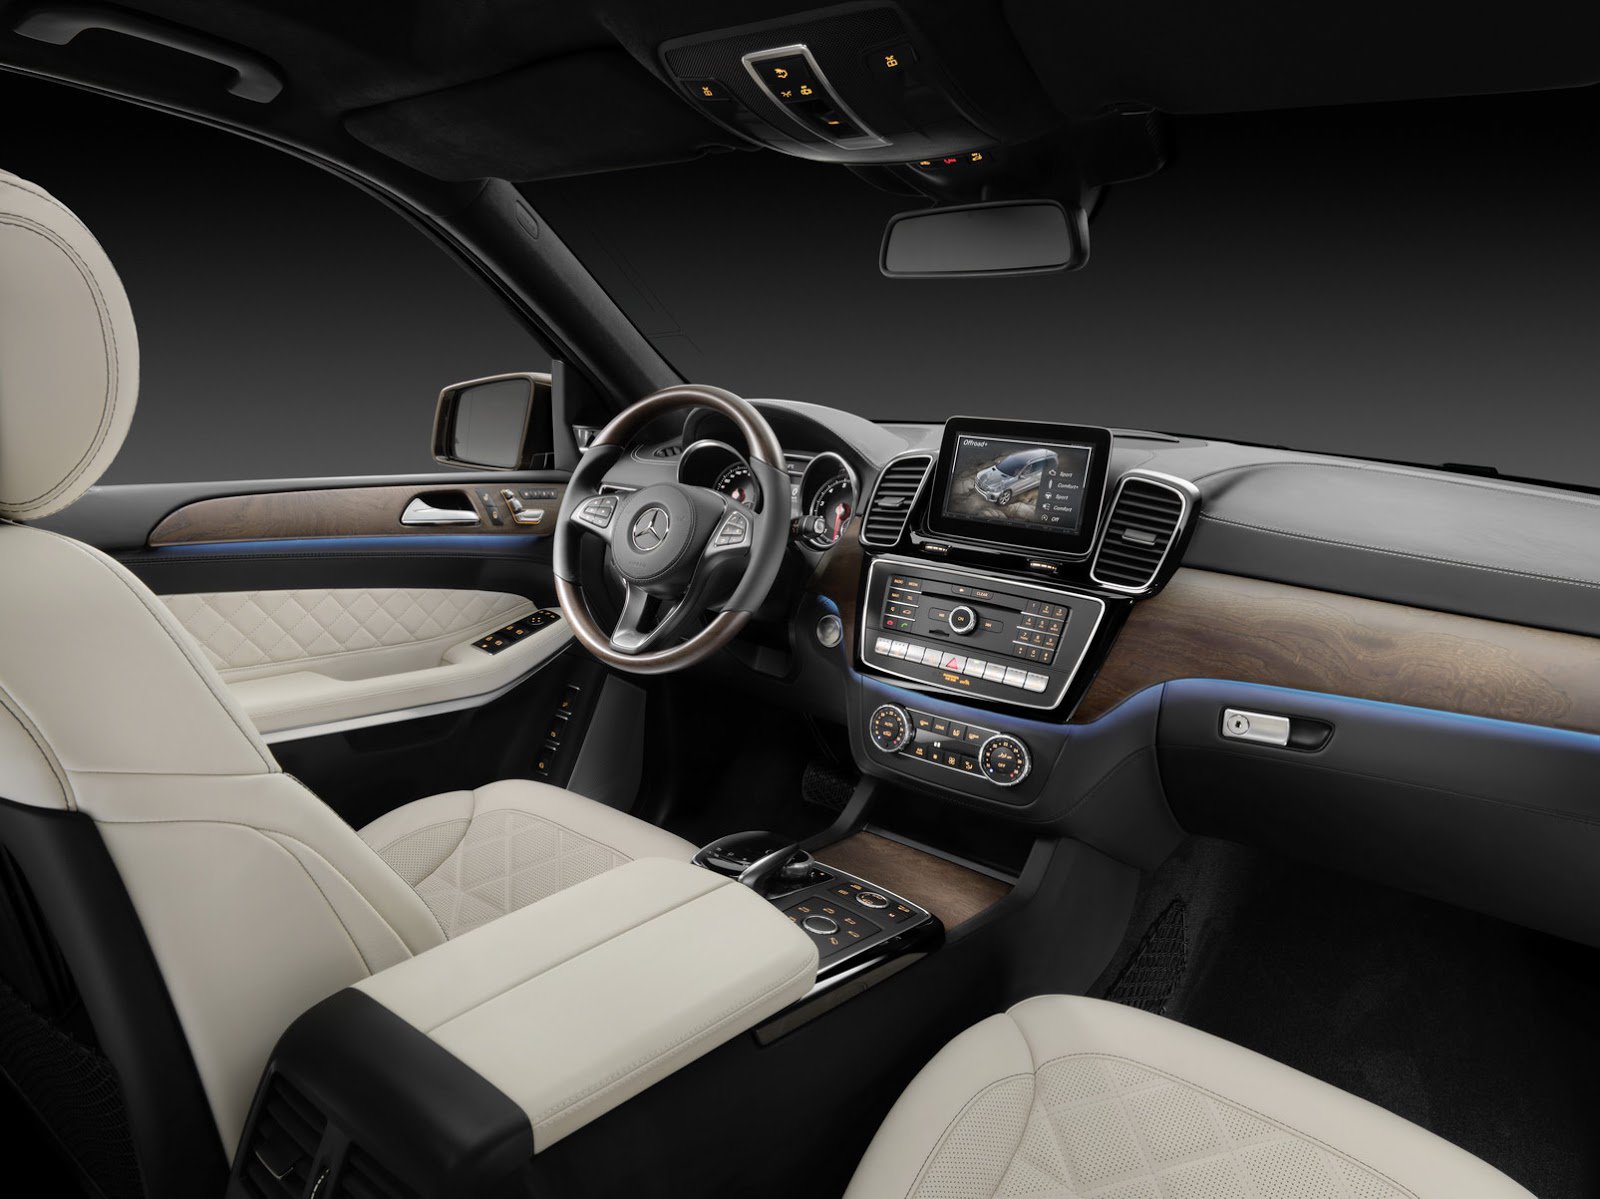 Kabina se sportovními sedadly a tříramenným volantem, Mercedes-Benz GLS 500 4Matic AMG Line.